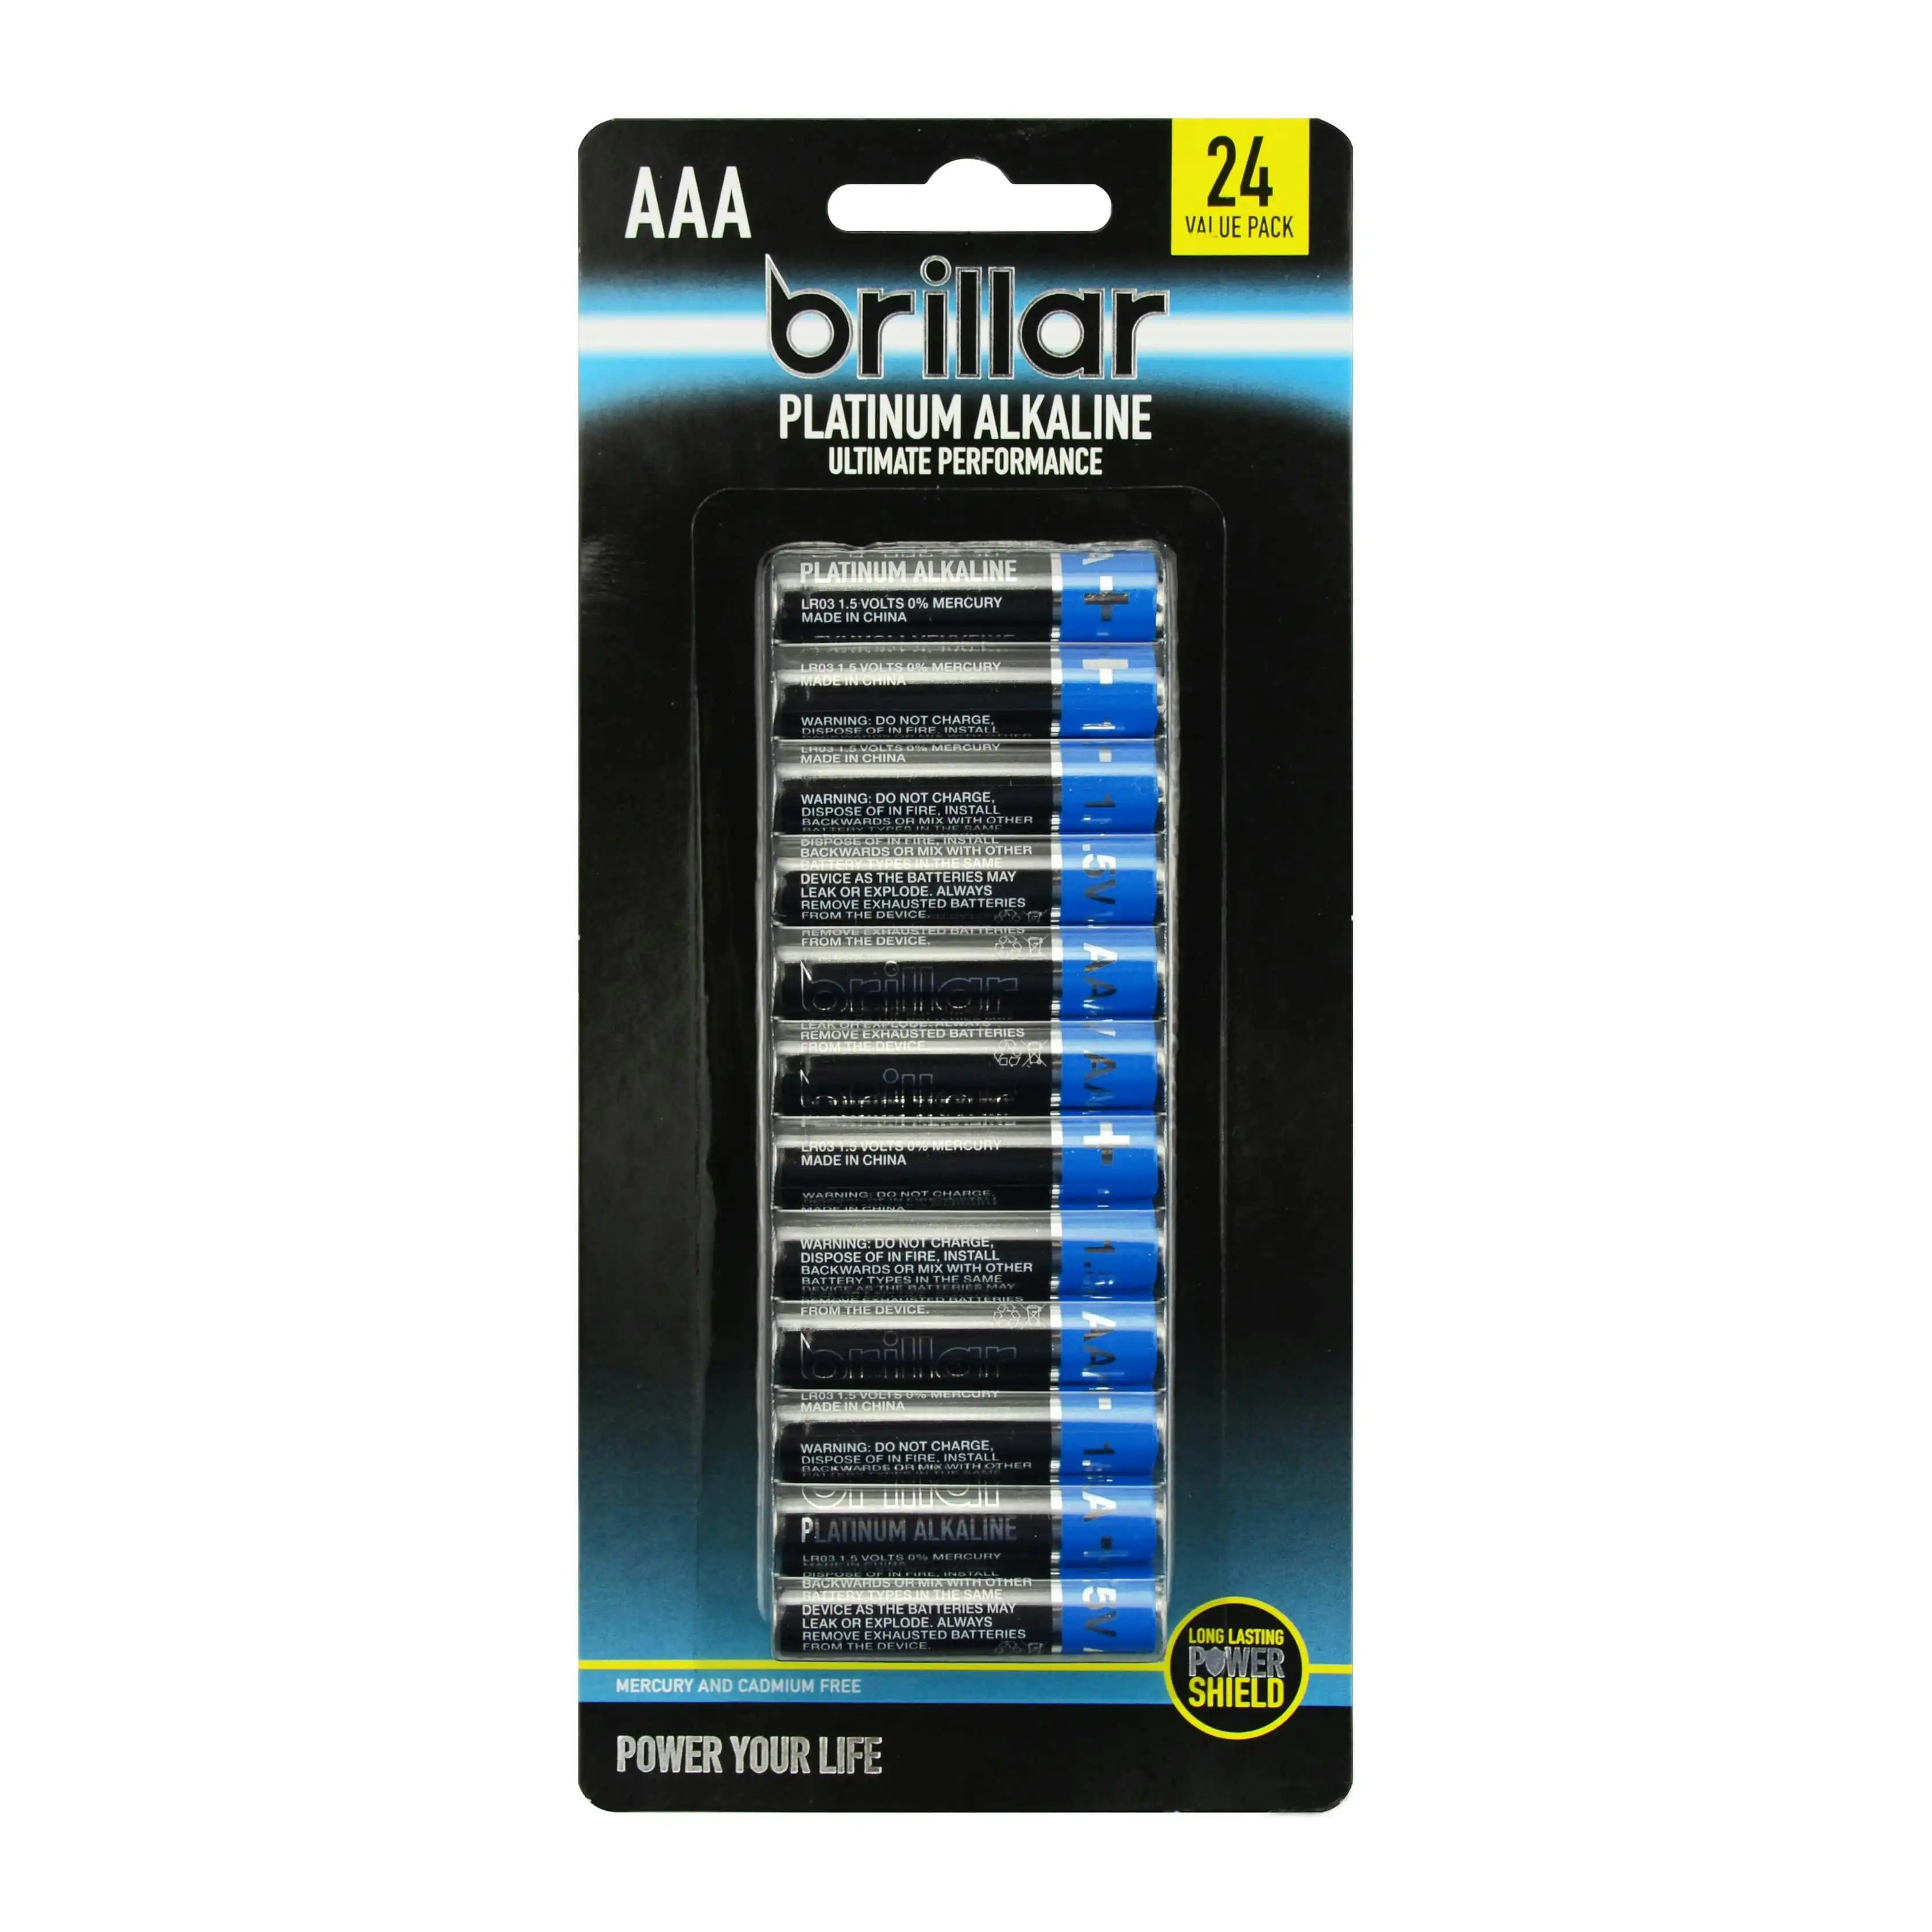 24 Pack of AAA Platinum Alkaline Batteries